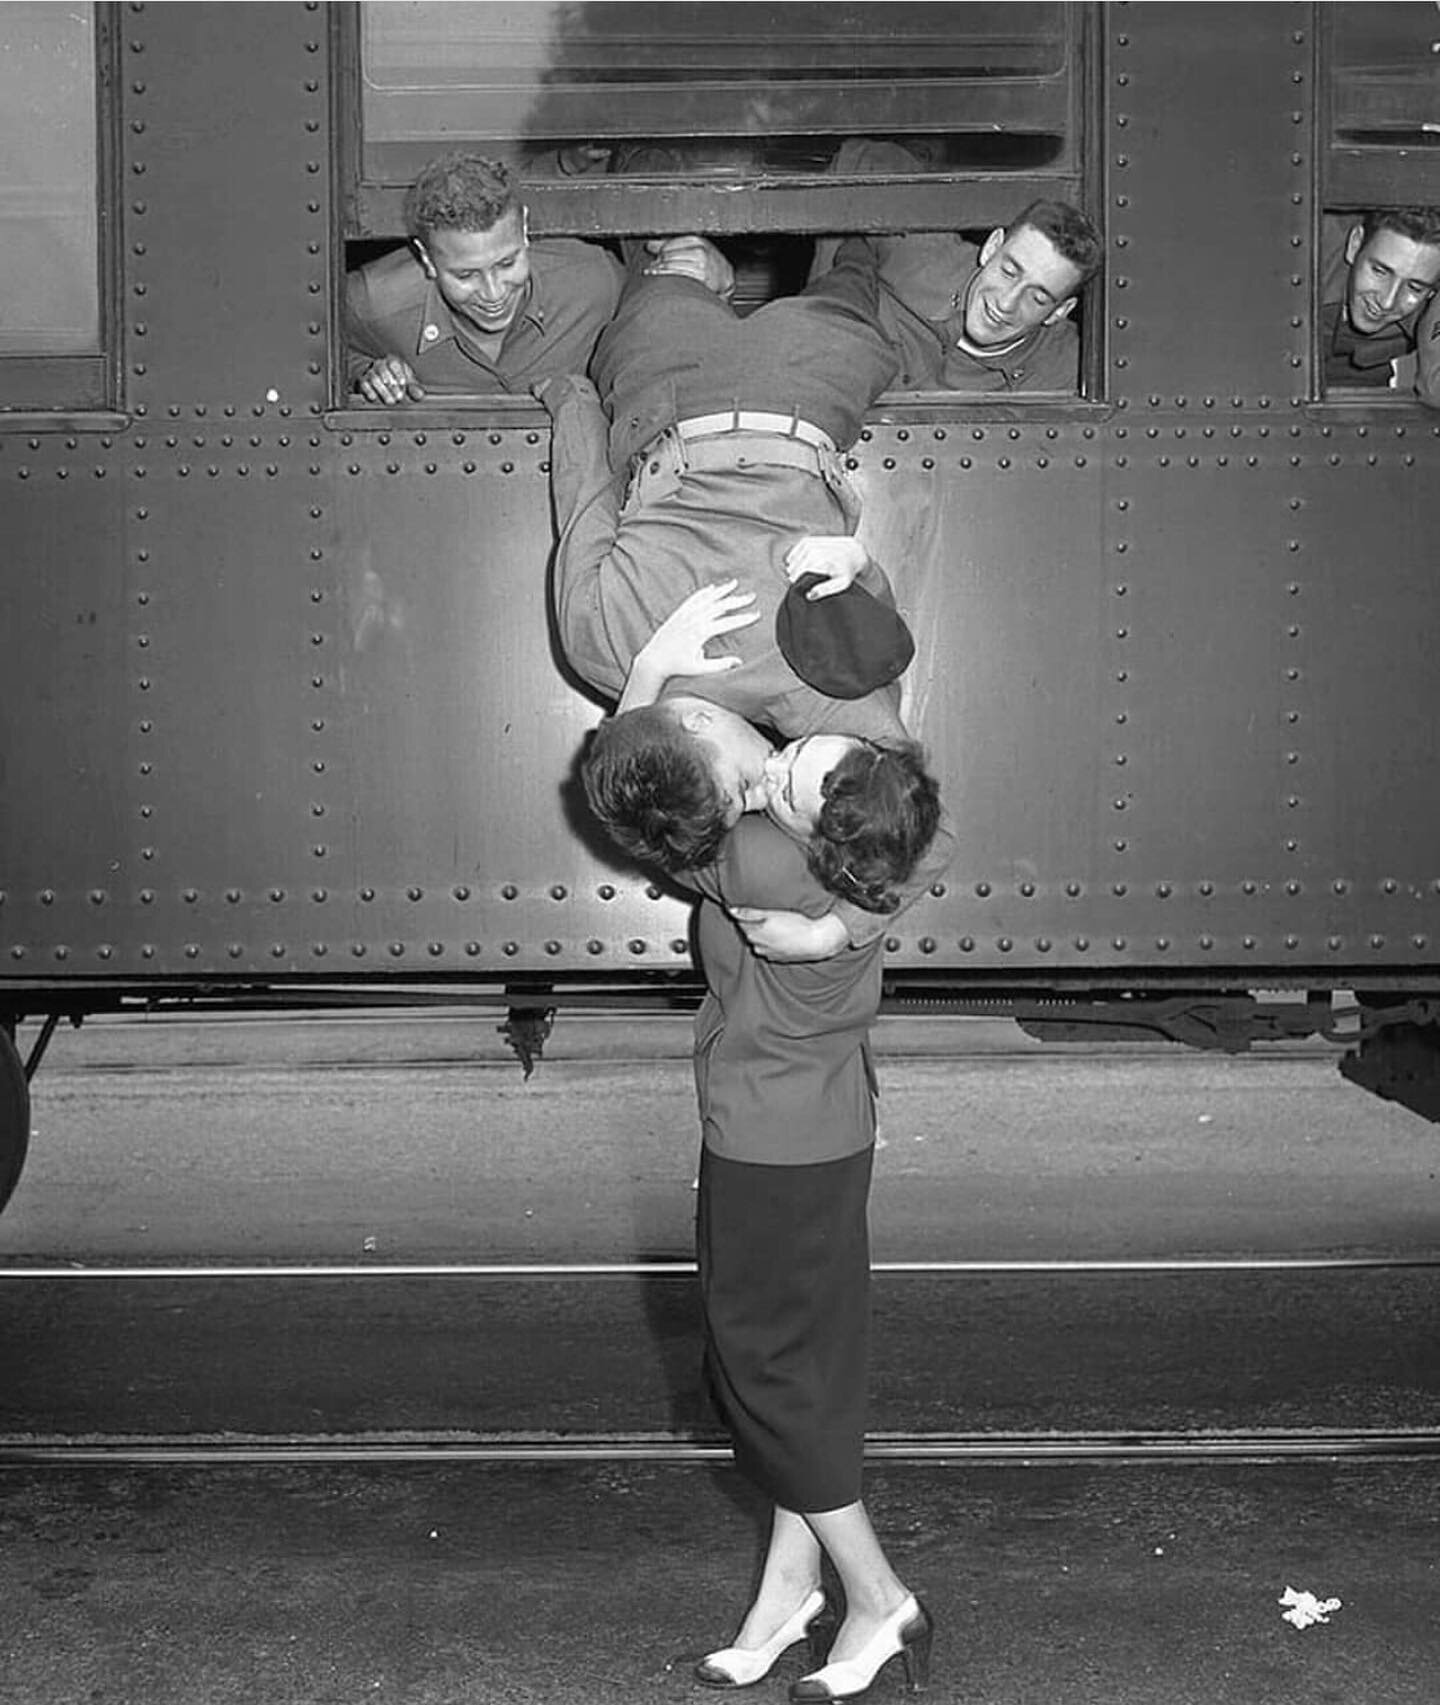 Kiss the ones you love.
.
Korean War Goodbye Kiss by Frank Q. Brown, 1950.